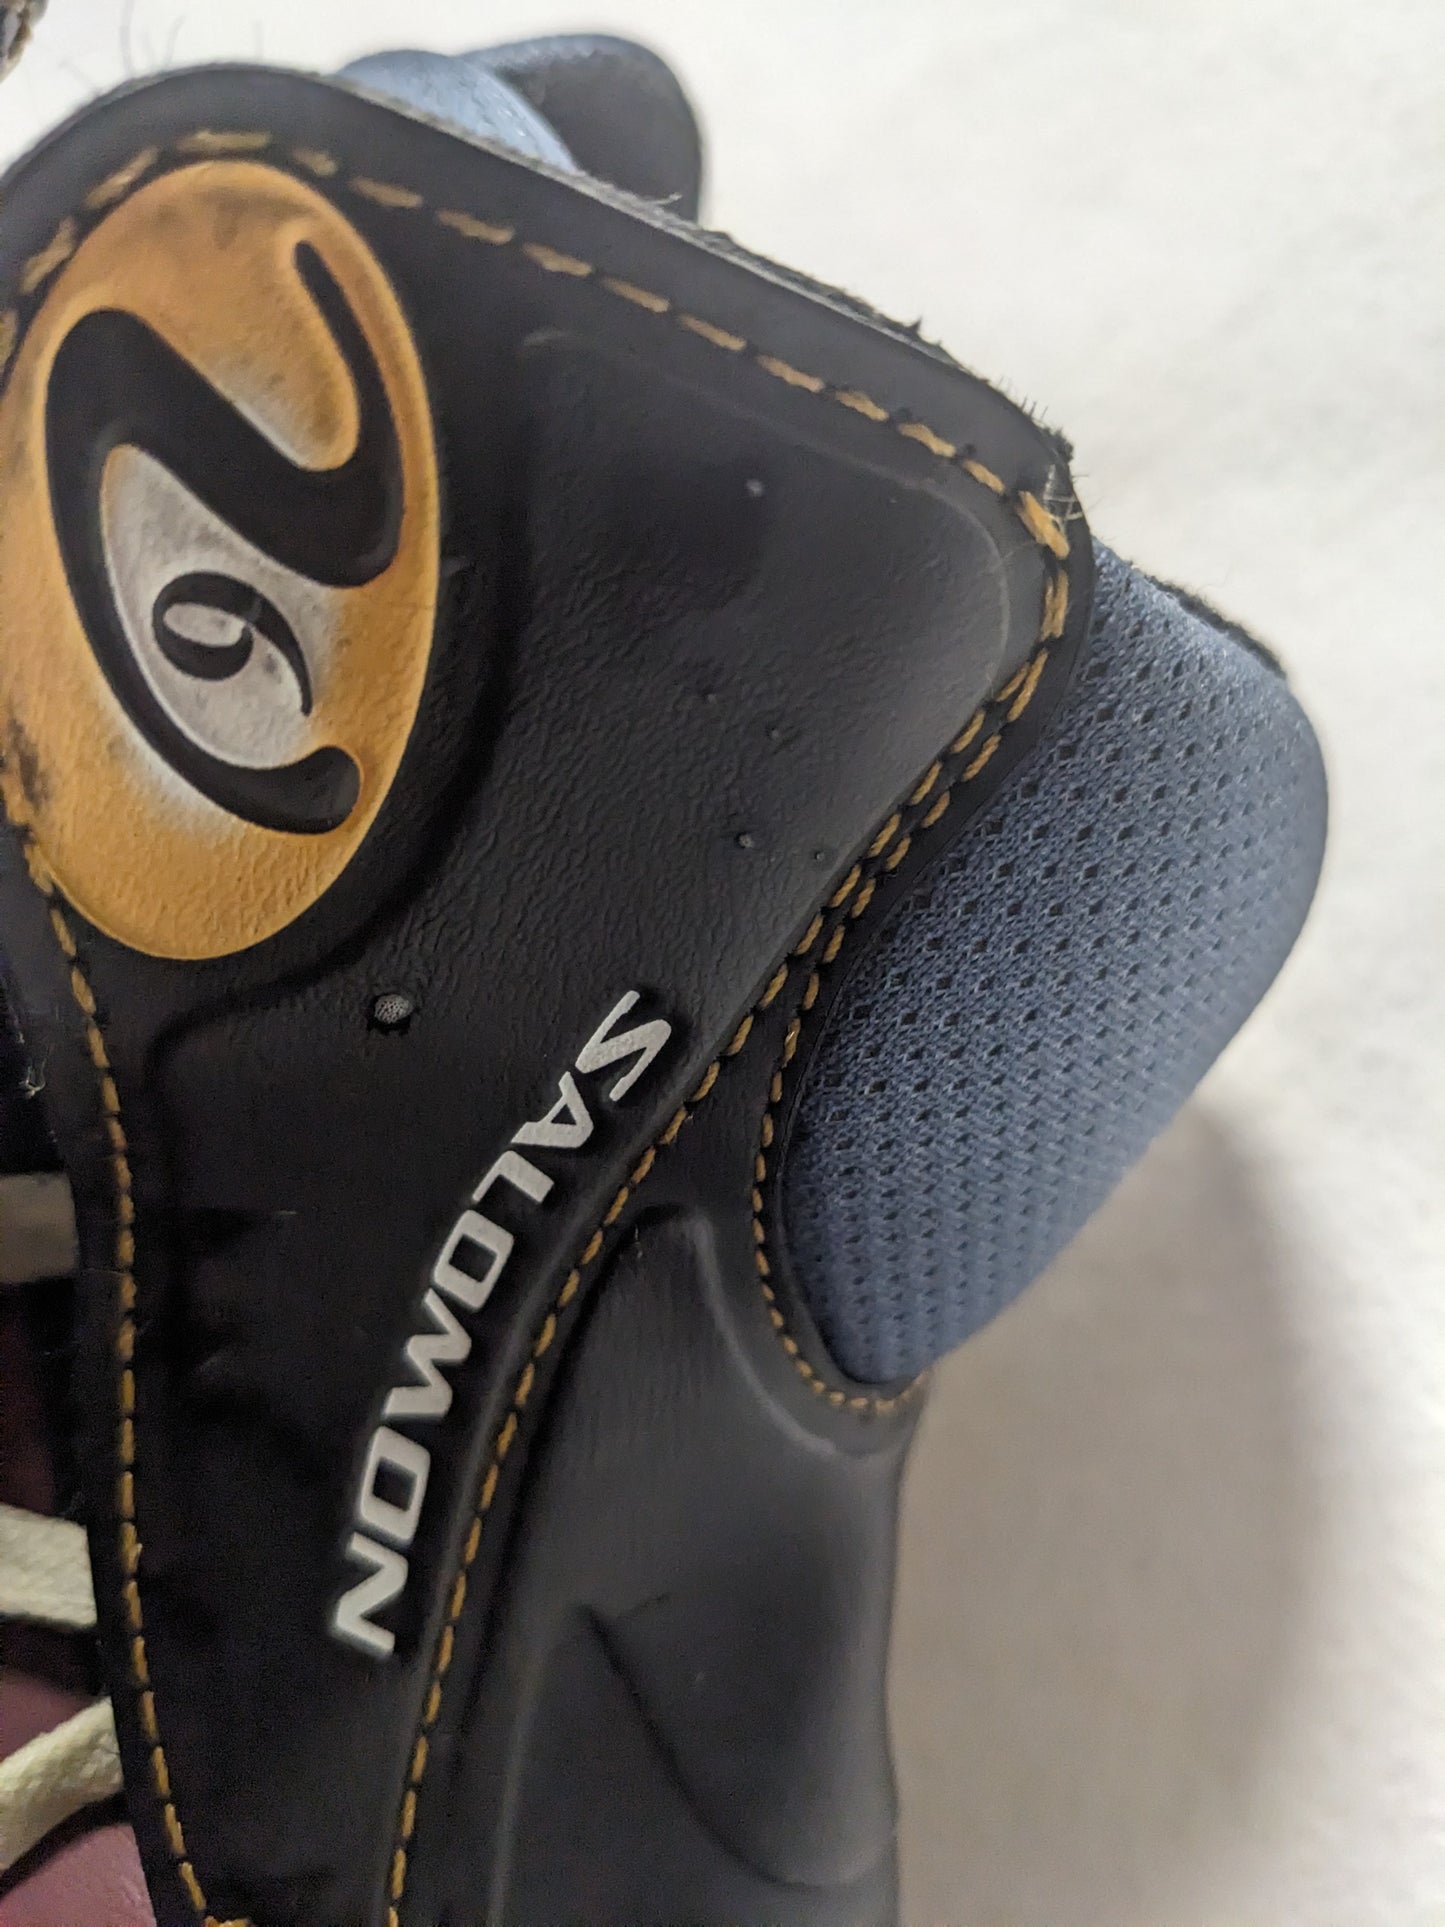 Salomon Vitane Cross Country SNS Profil Ski Boots Size 22 Color Maroon Condition Used